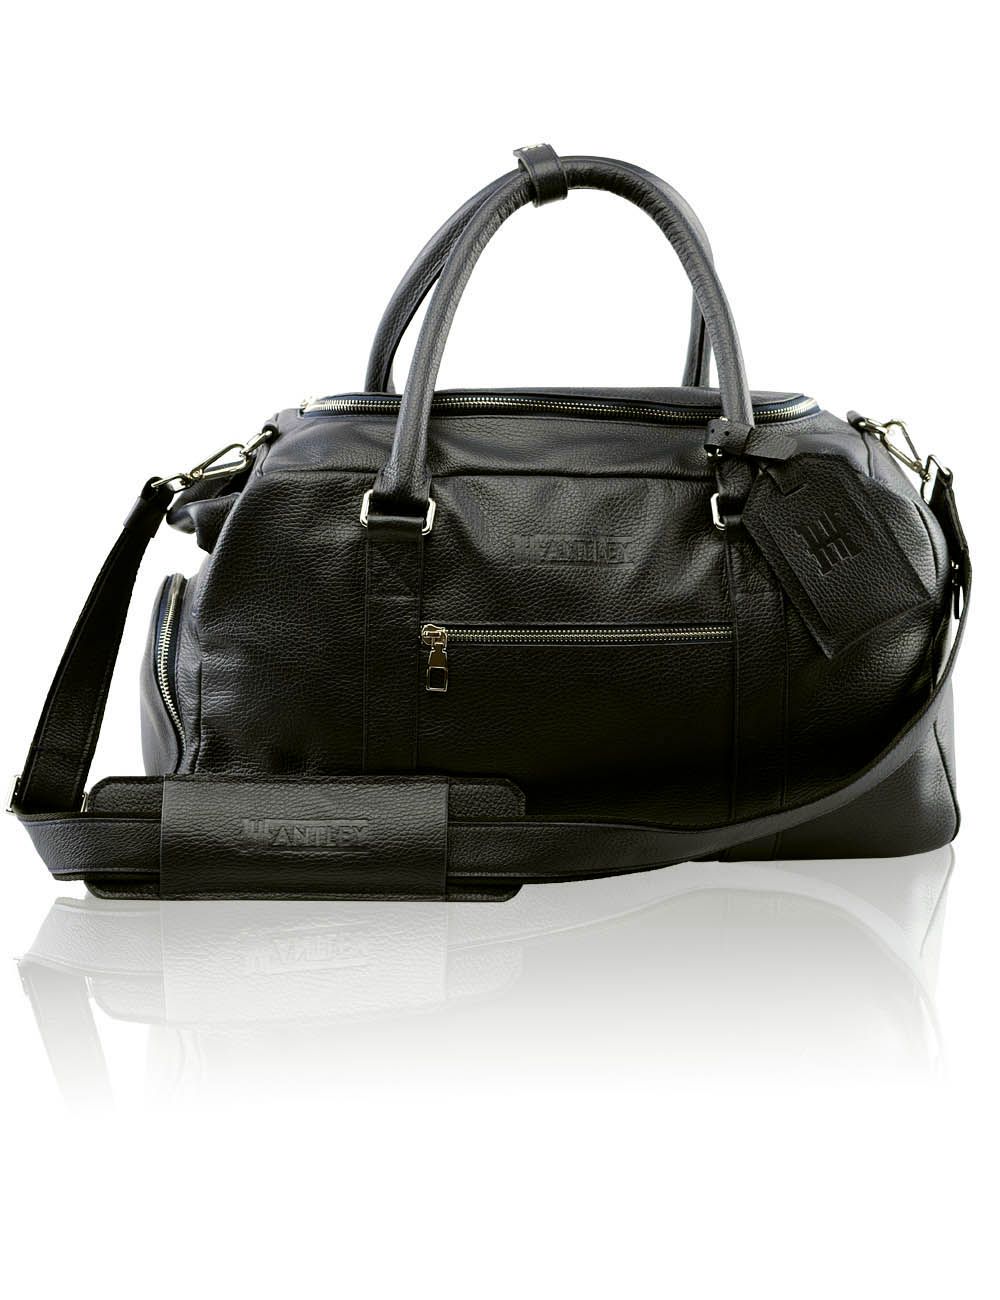 Дорожная сумка унисекс Hantley Foster черная, 24х47х26 см